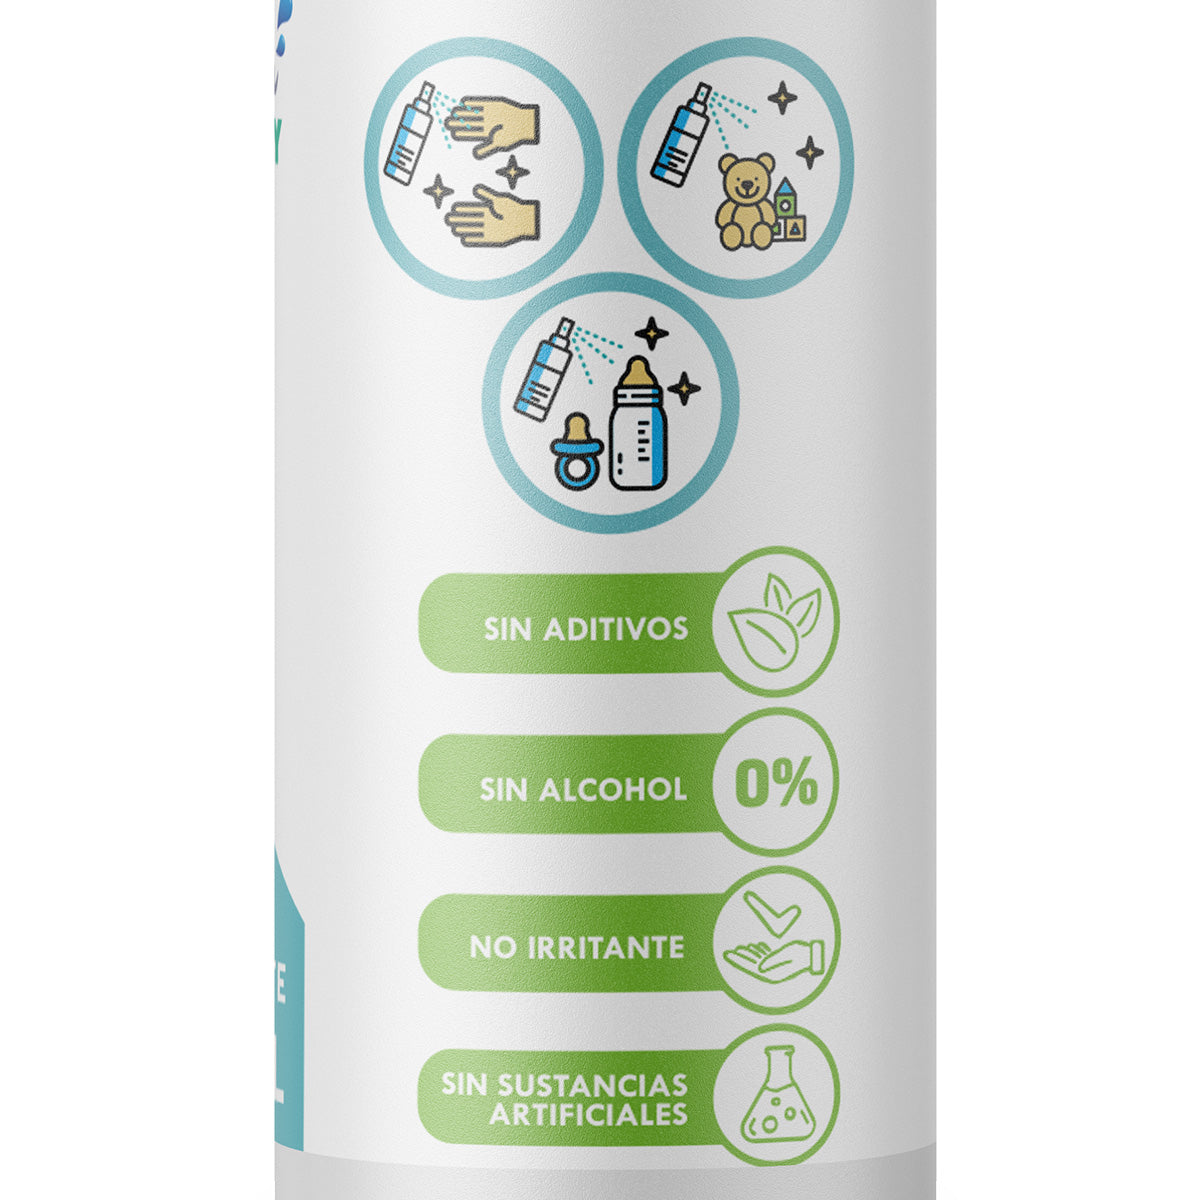 Desinfectante natural AquaTouch 50ml